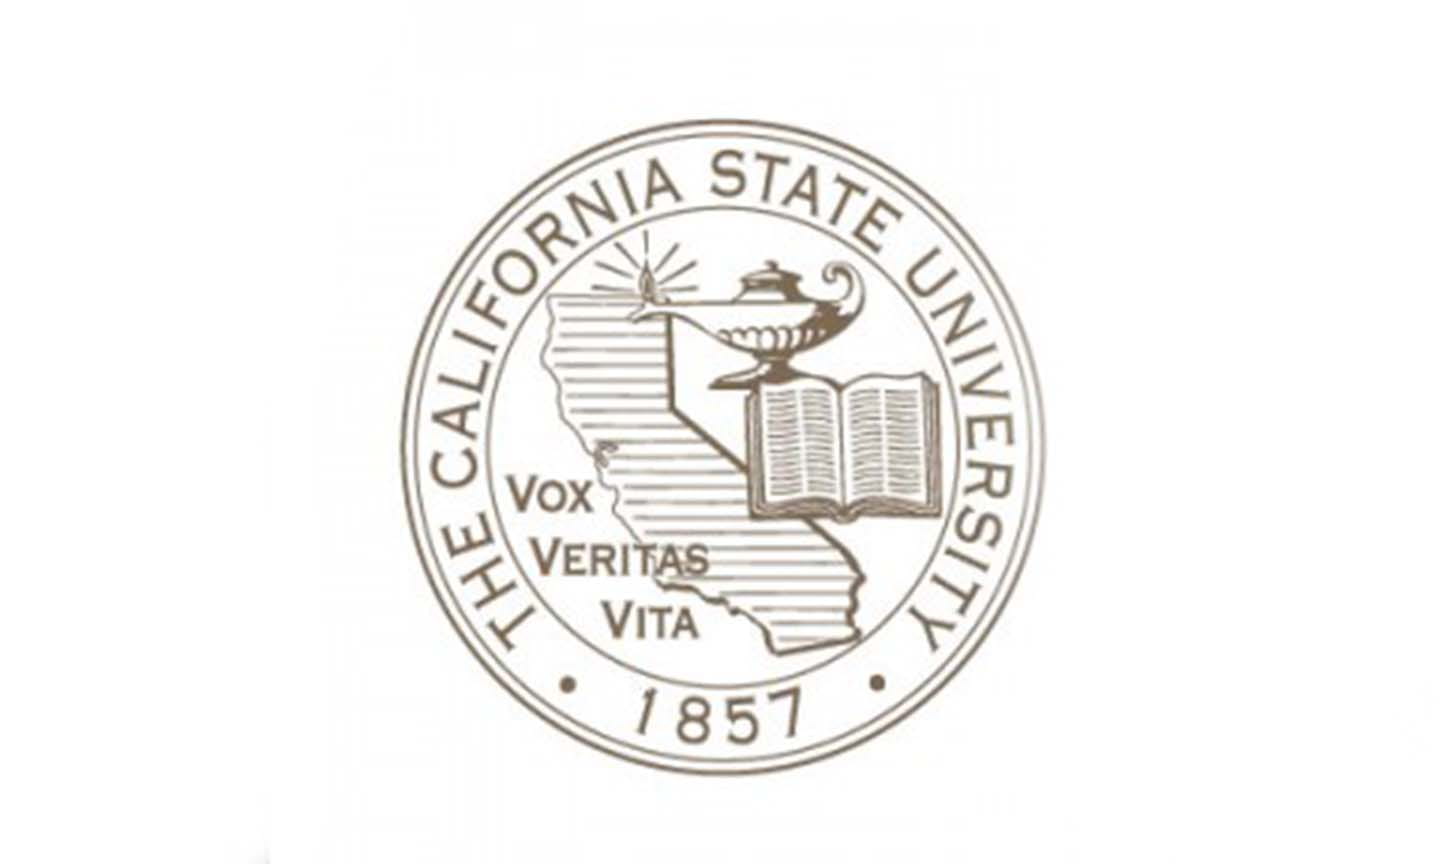 California State University Seal